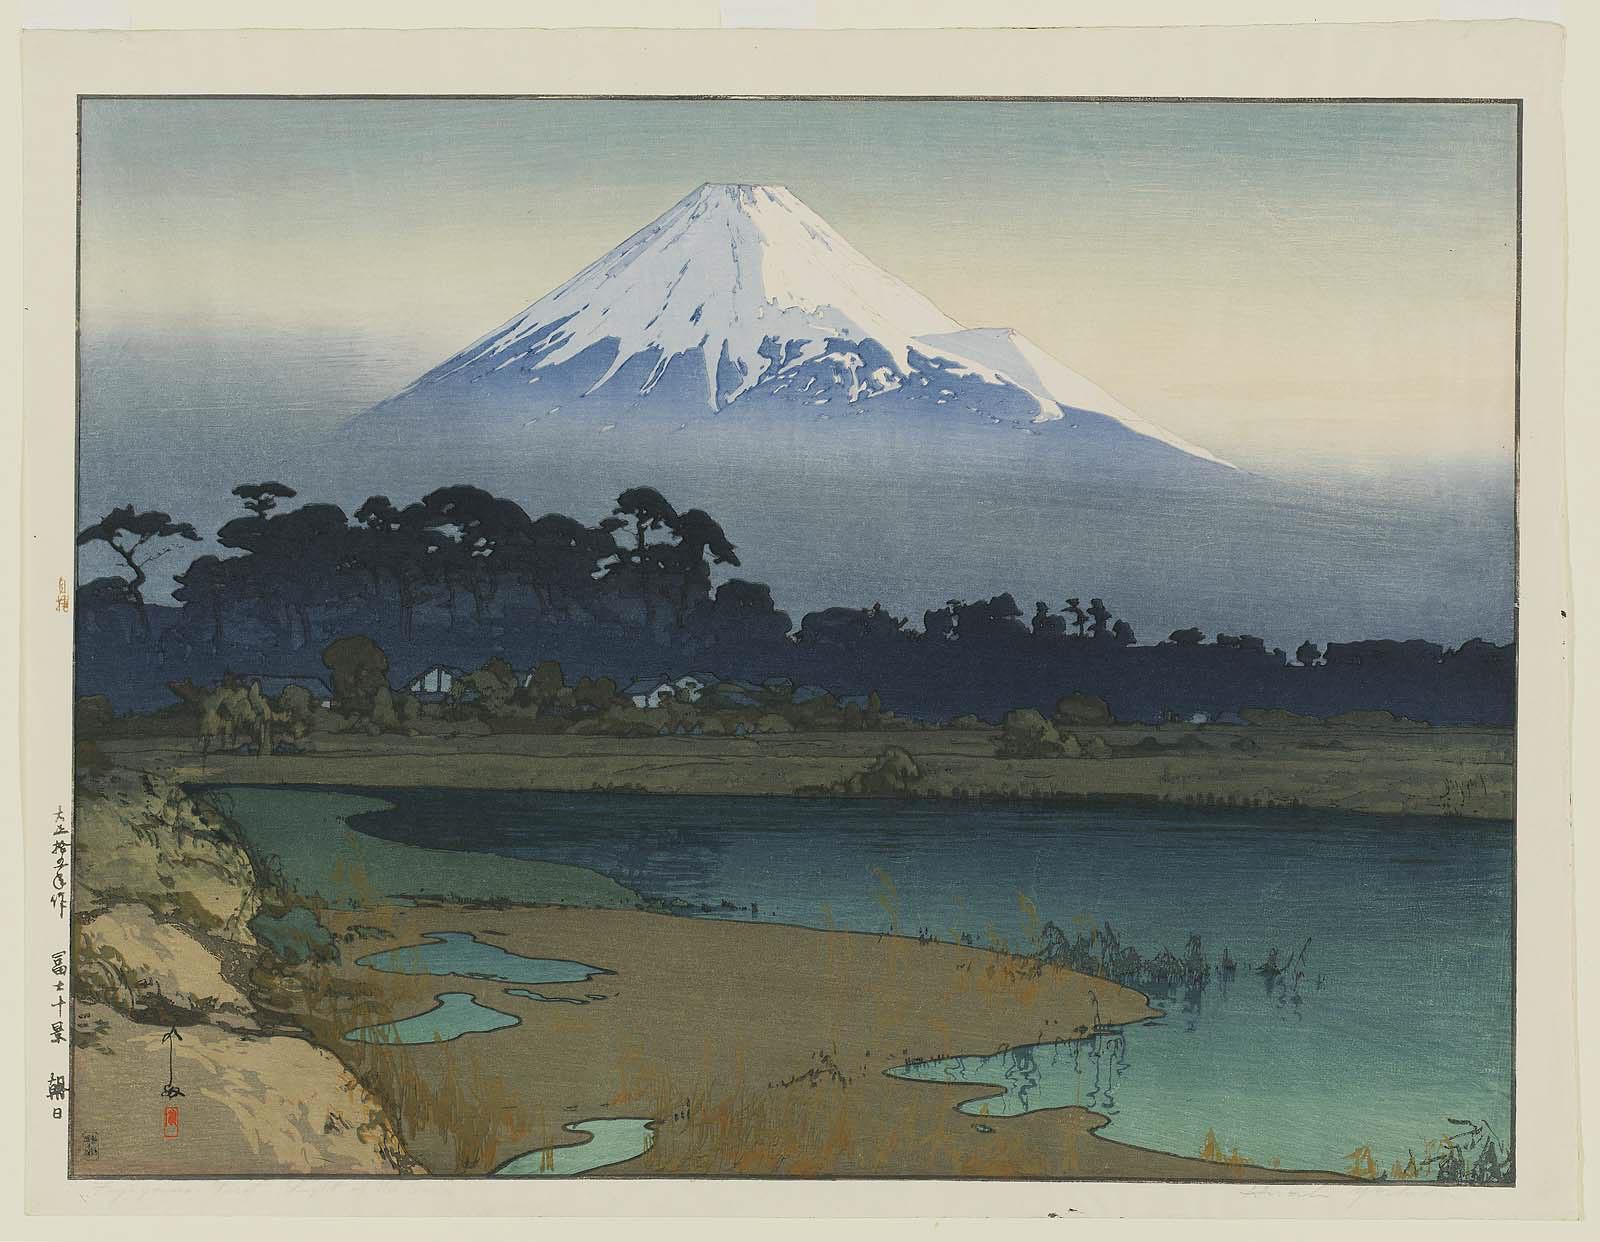 Sunrise (Asahi), from the series Ten Views of Mount Fuji (Fuji 